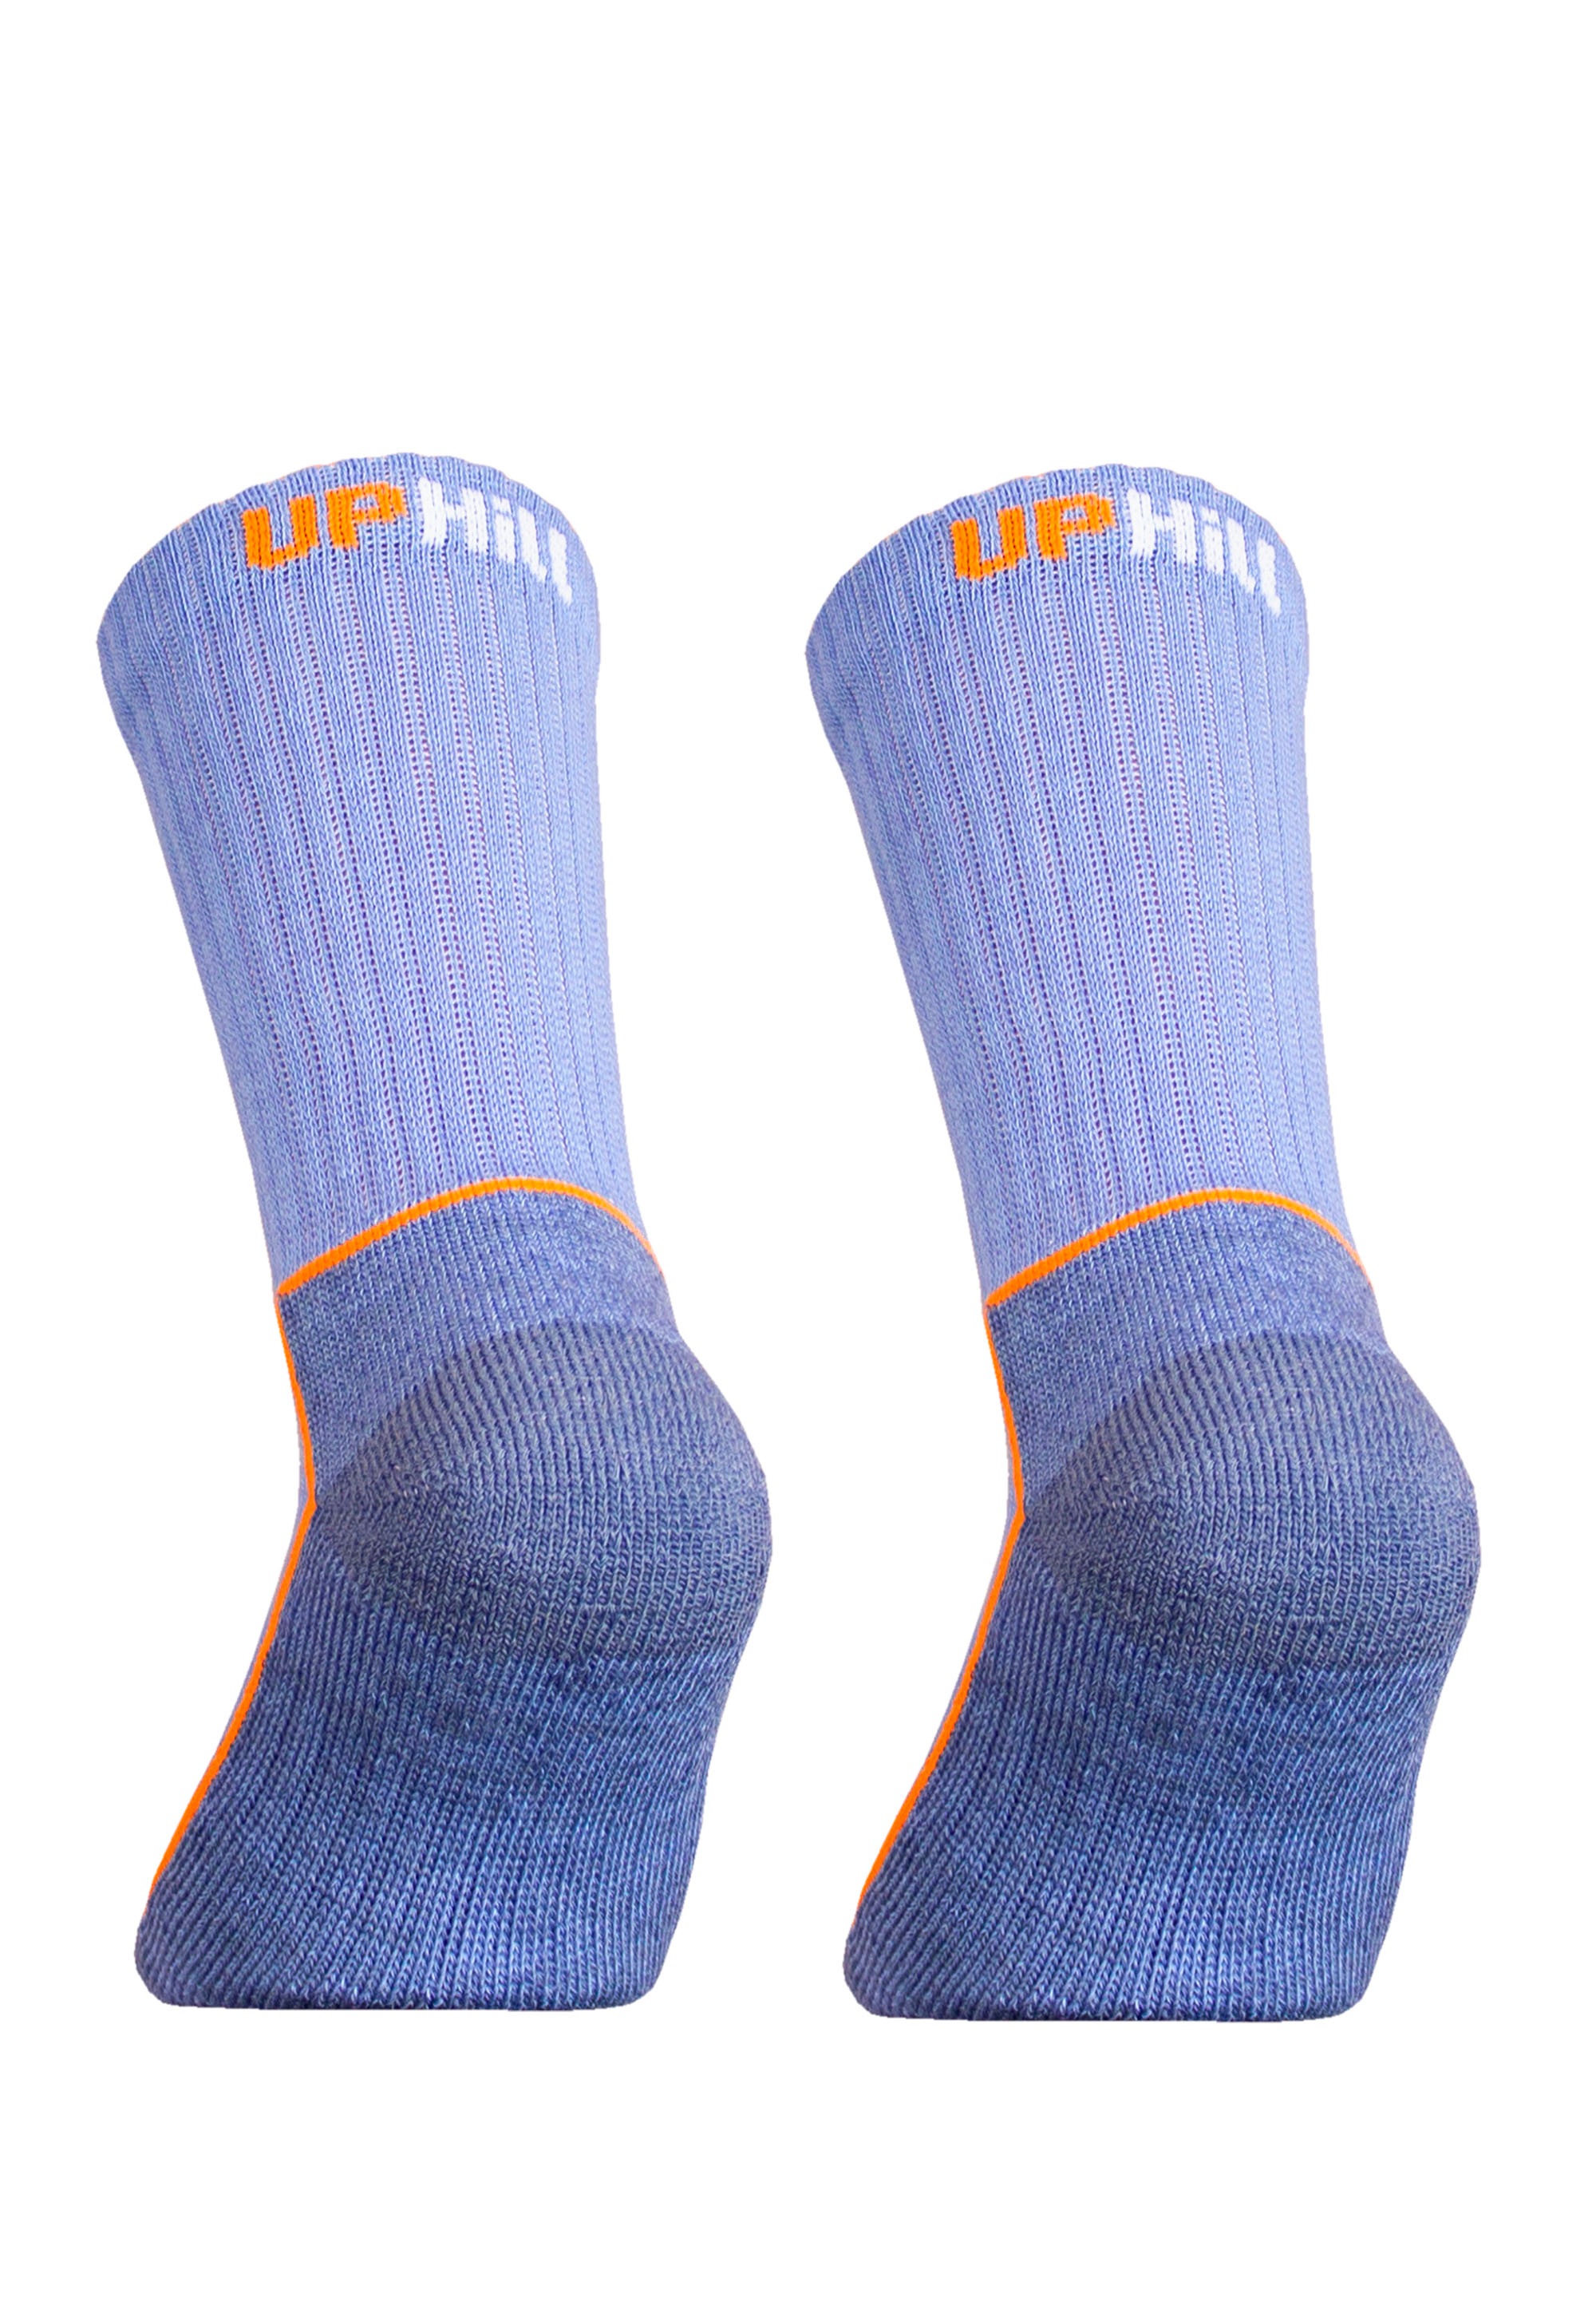 UphillSport Socken SAANA JR (2 Paar) im 2er-Pack mit Flextech-Struktur